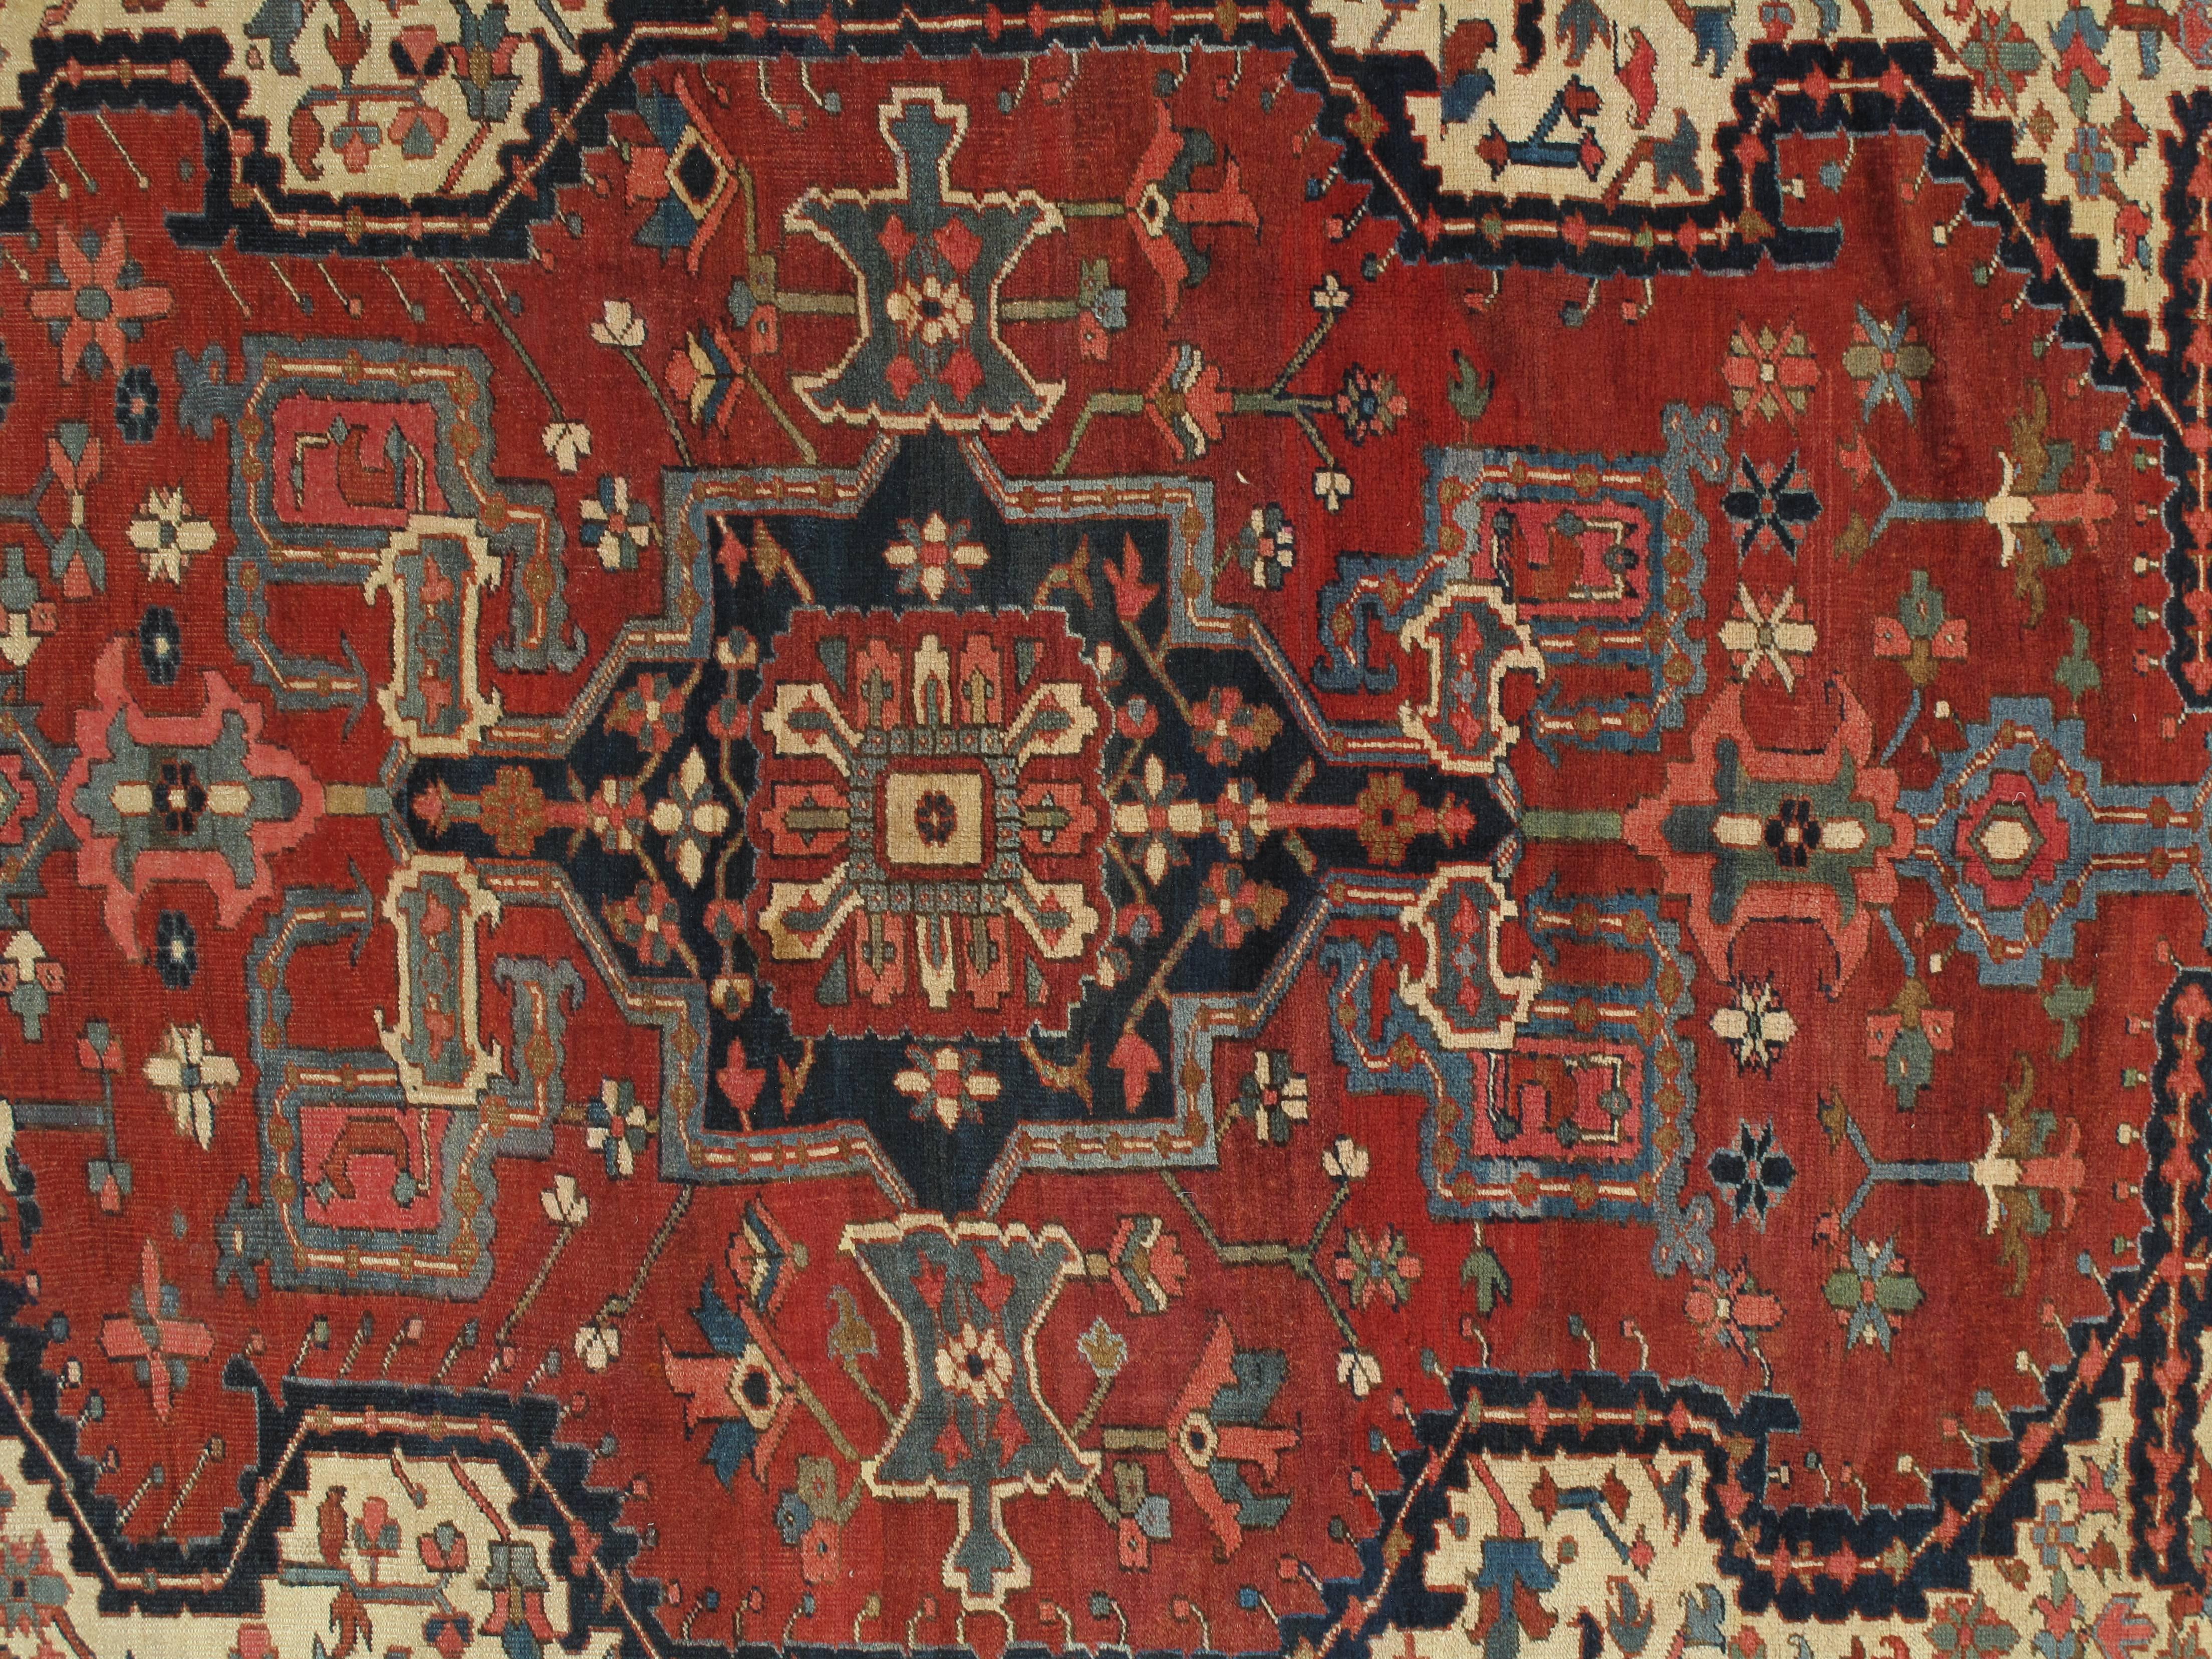 Antique Bakhshaish Carpet, Persian Handmade Rug, Rust, Navy, Ivory, Light Blue 1